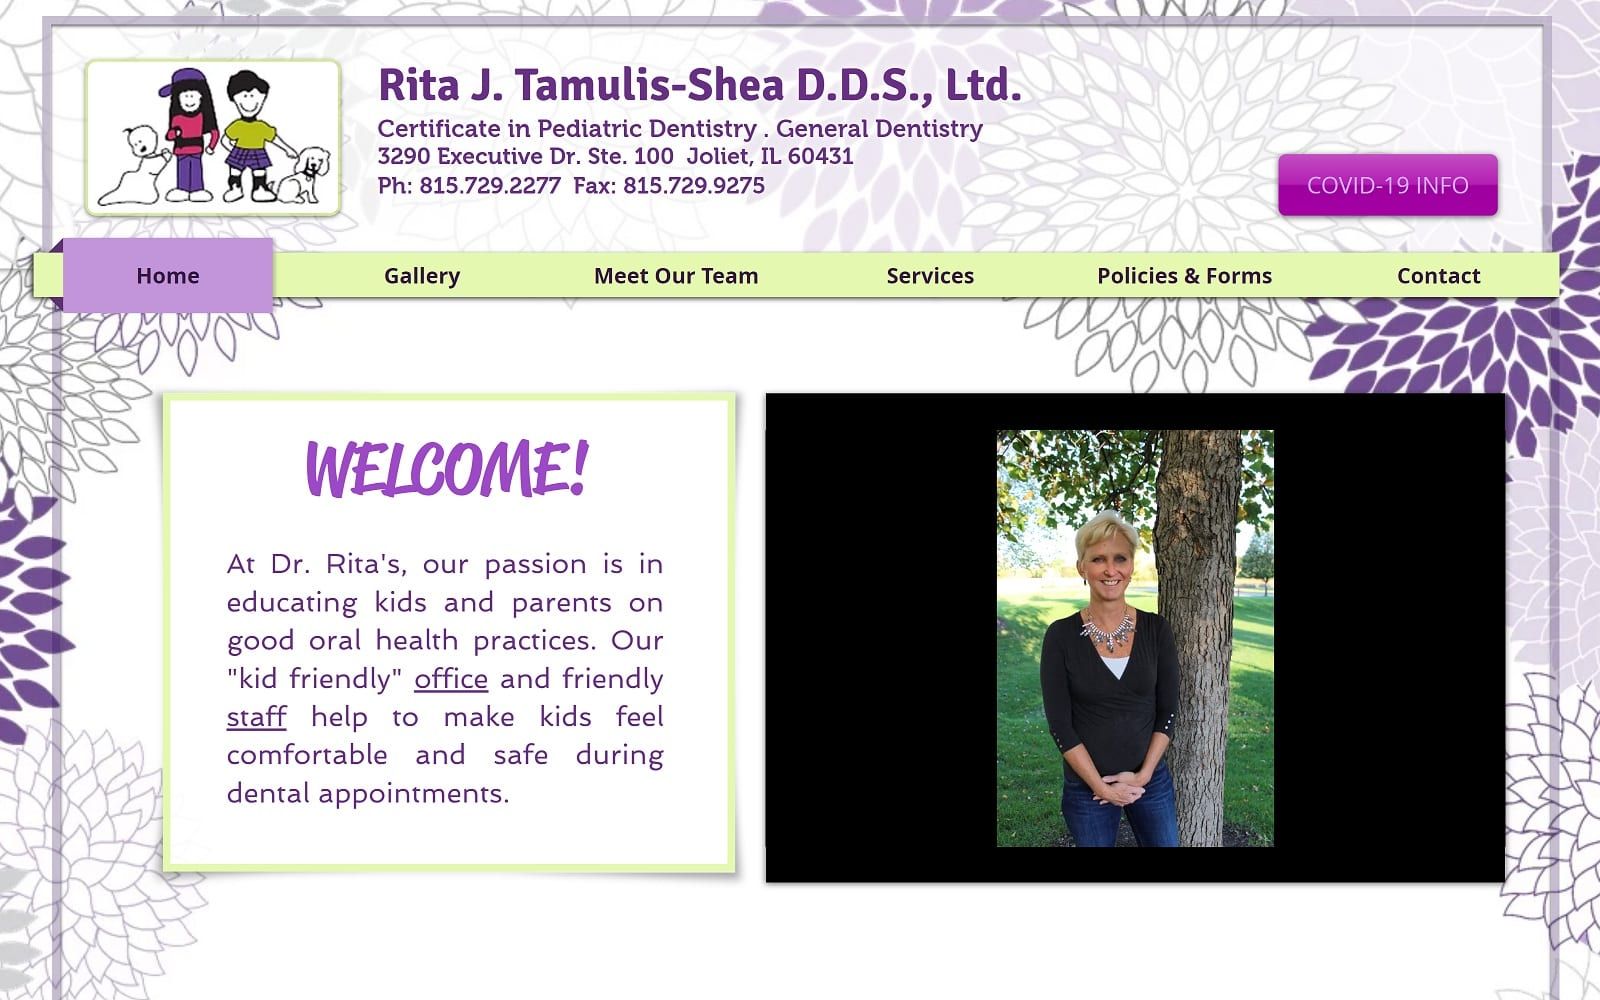 The screenshot of rita j. Tamulis-shea, d. D. S. , ltd. Drritajtamulisshea. Com website